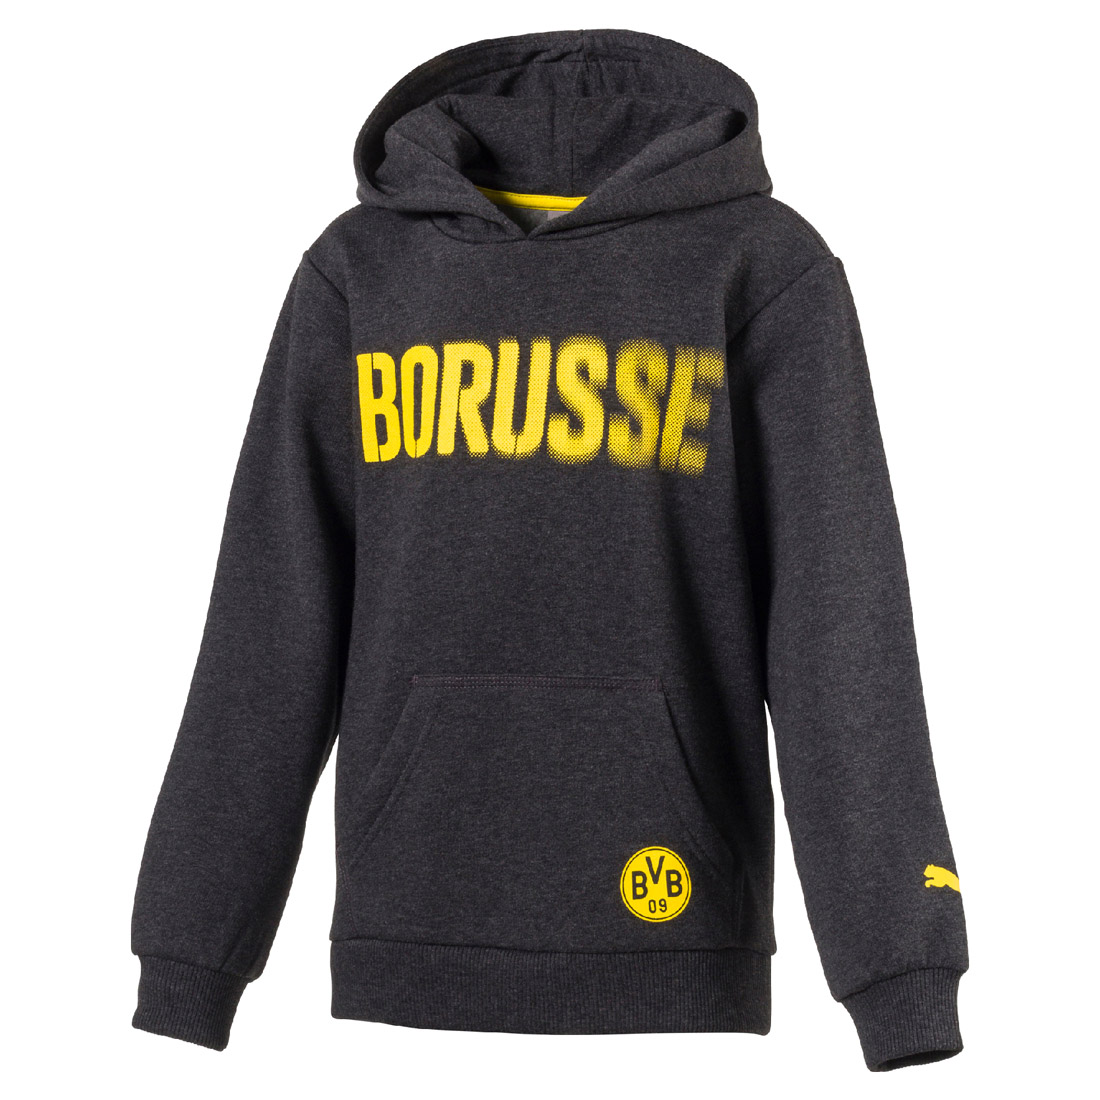 Puma BVB Borussia Graphic Hoody Kinder Sweatshirt Dortmund 09 grau 752180 02